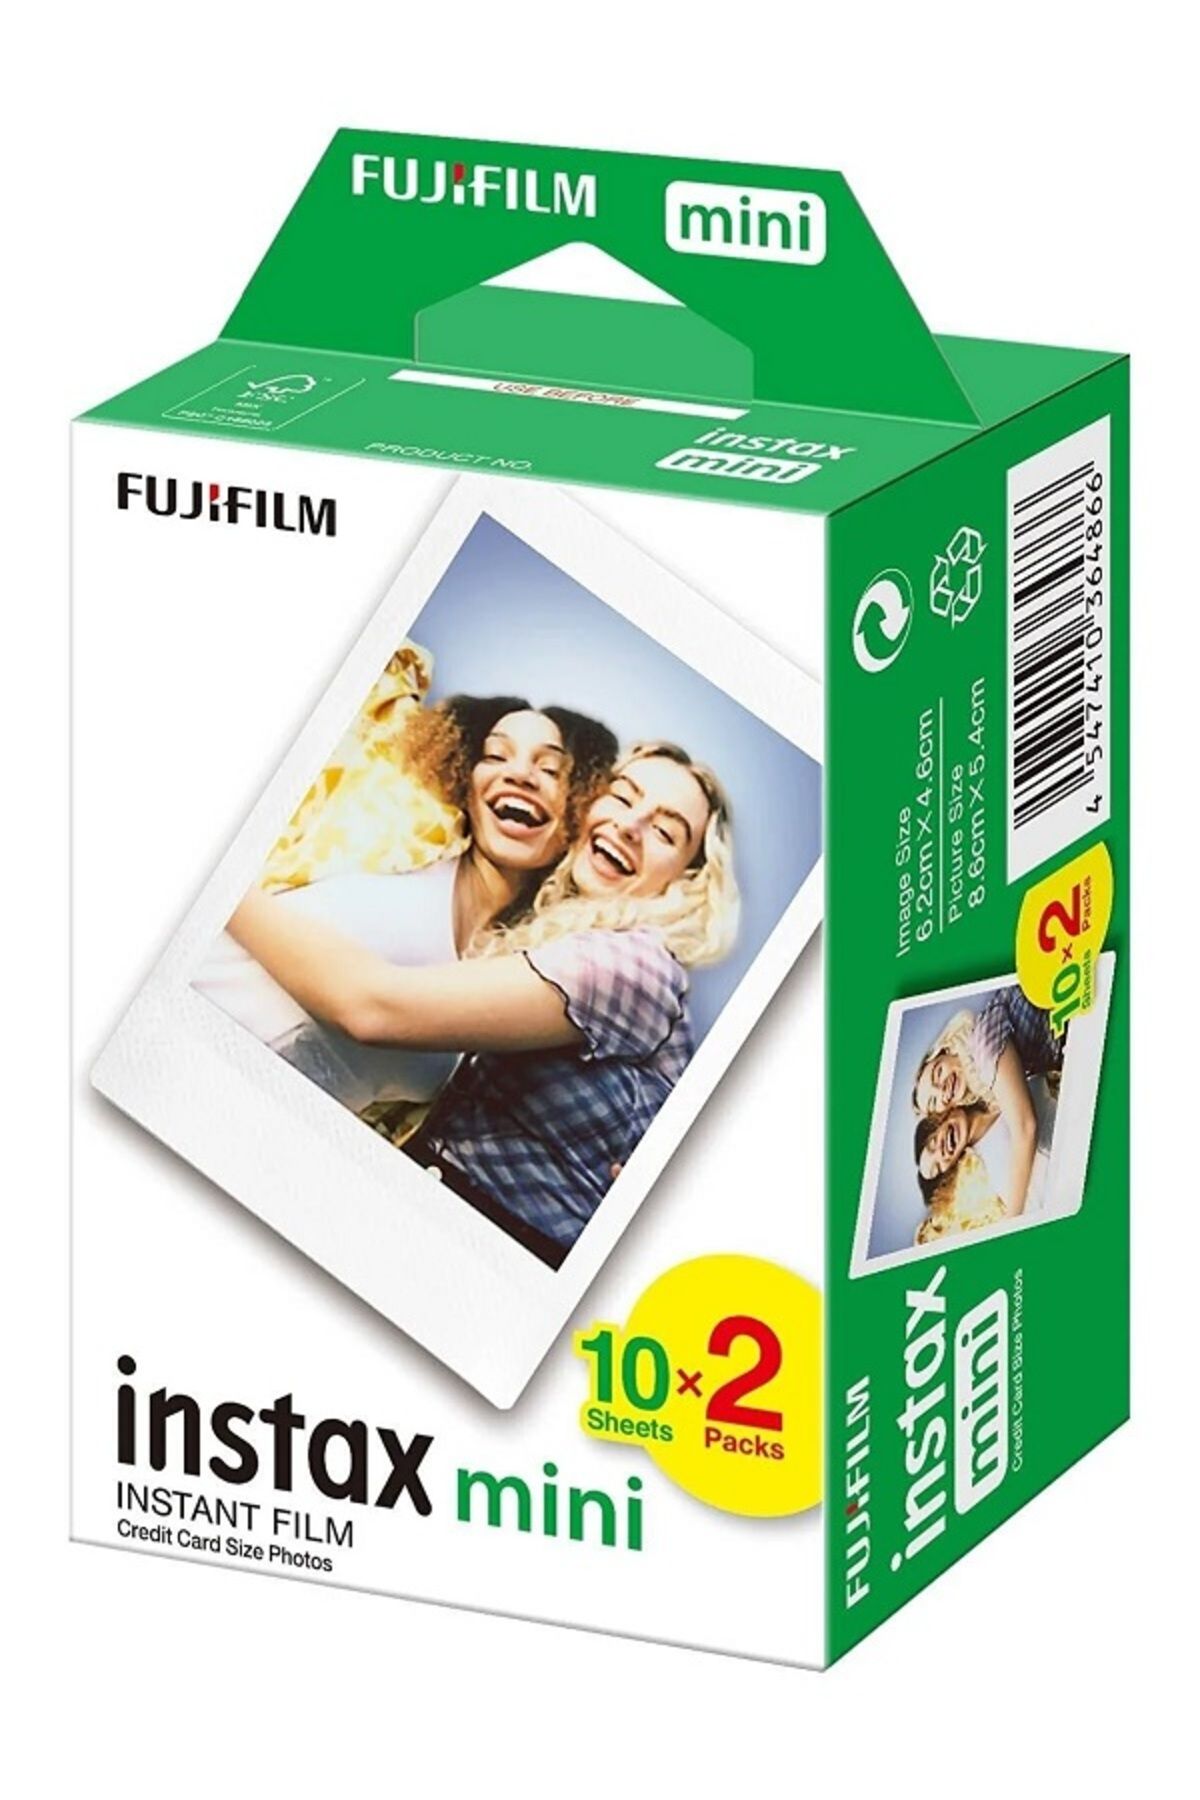 Fujifilm Fuji İnstax Mini 10x2 20 Sheets Fotoğraf Filmi 1 Paket (20 Poz) Uyumlu